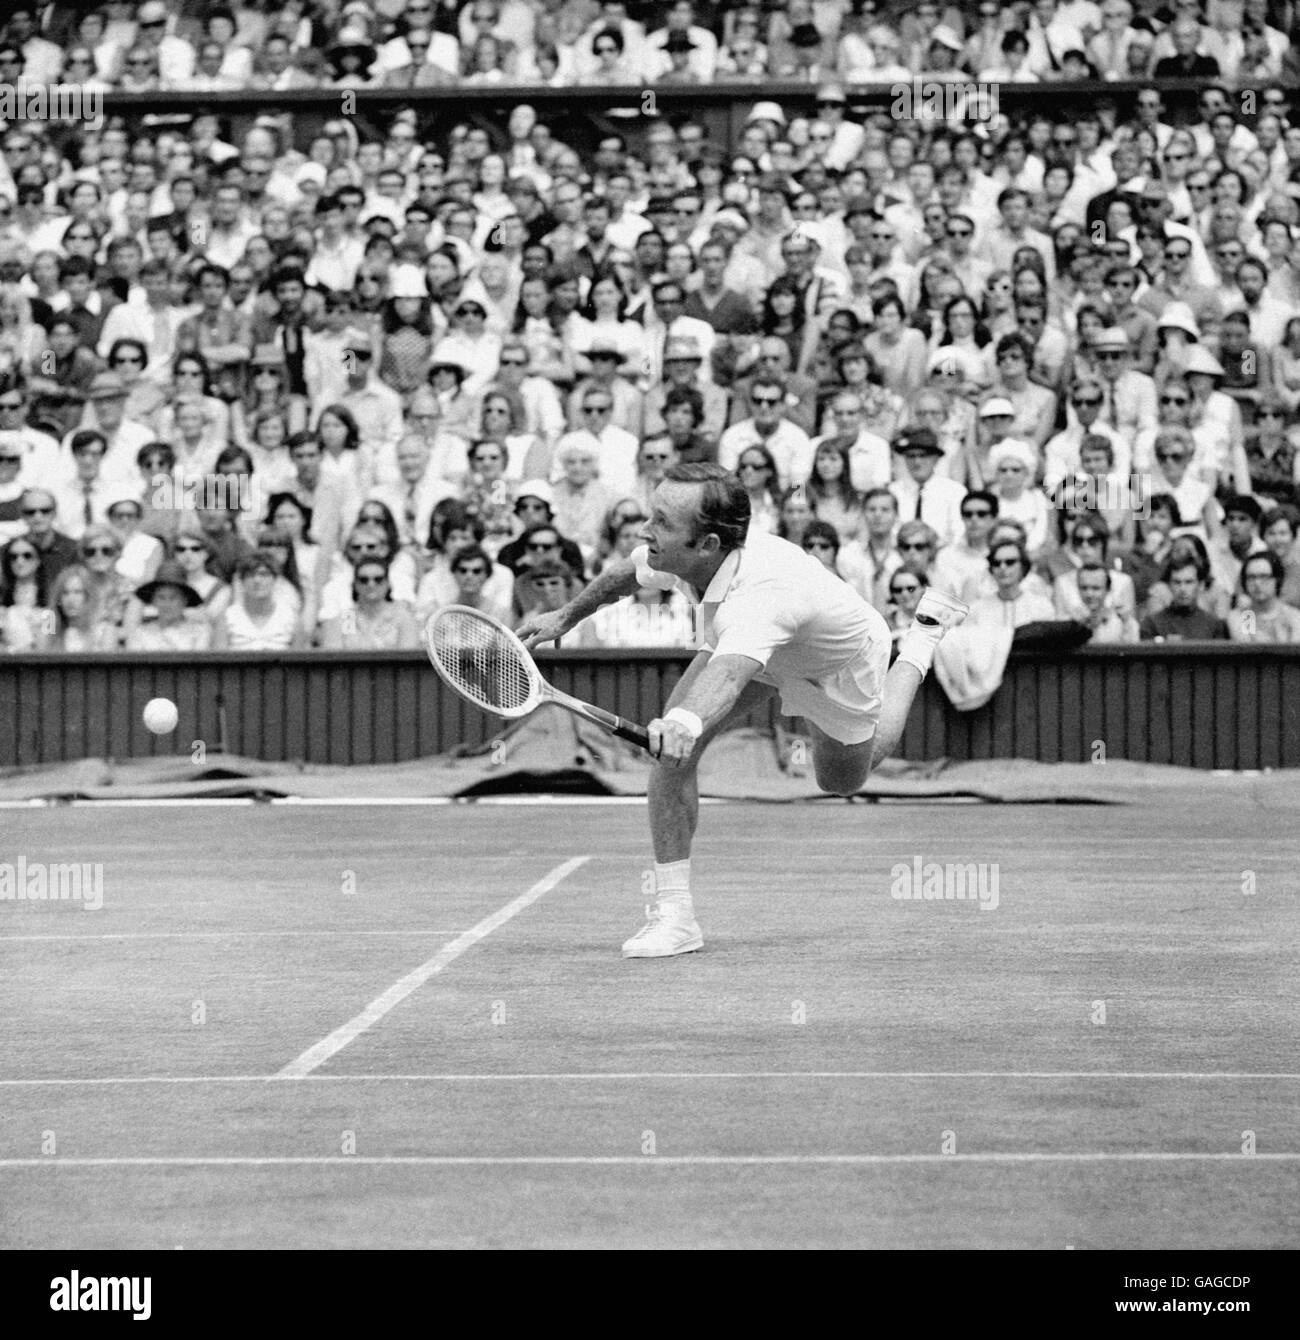 Tennis - Wimbledon Championships - Herreneinzel - Finale - Rod Laver gegen John Newcombe. Rod Laver streckt sich, um den Ball zurückzugeben Stockfoto